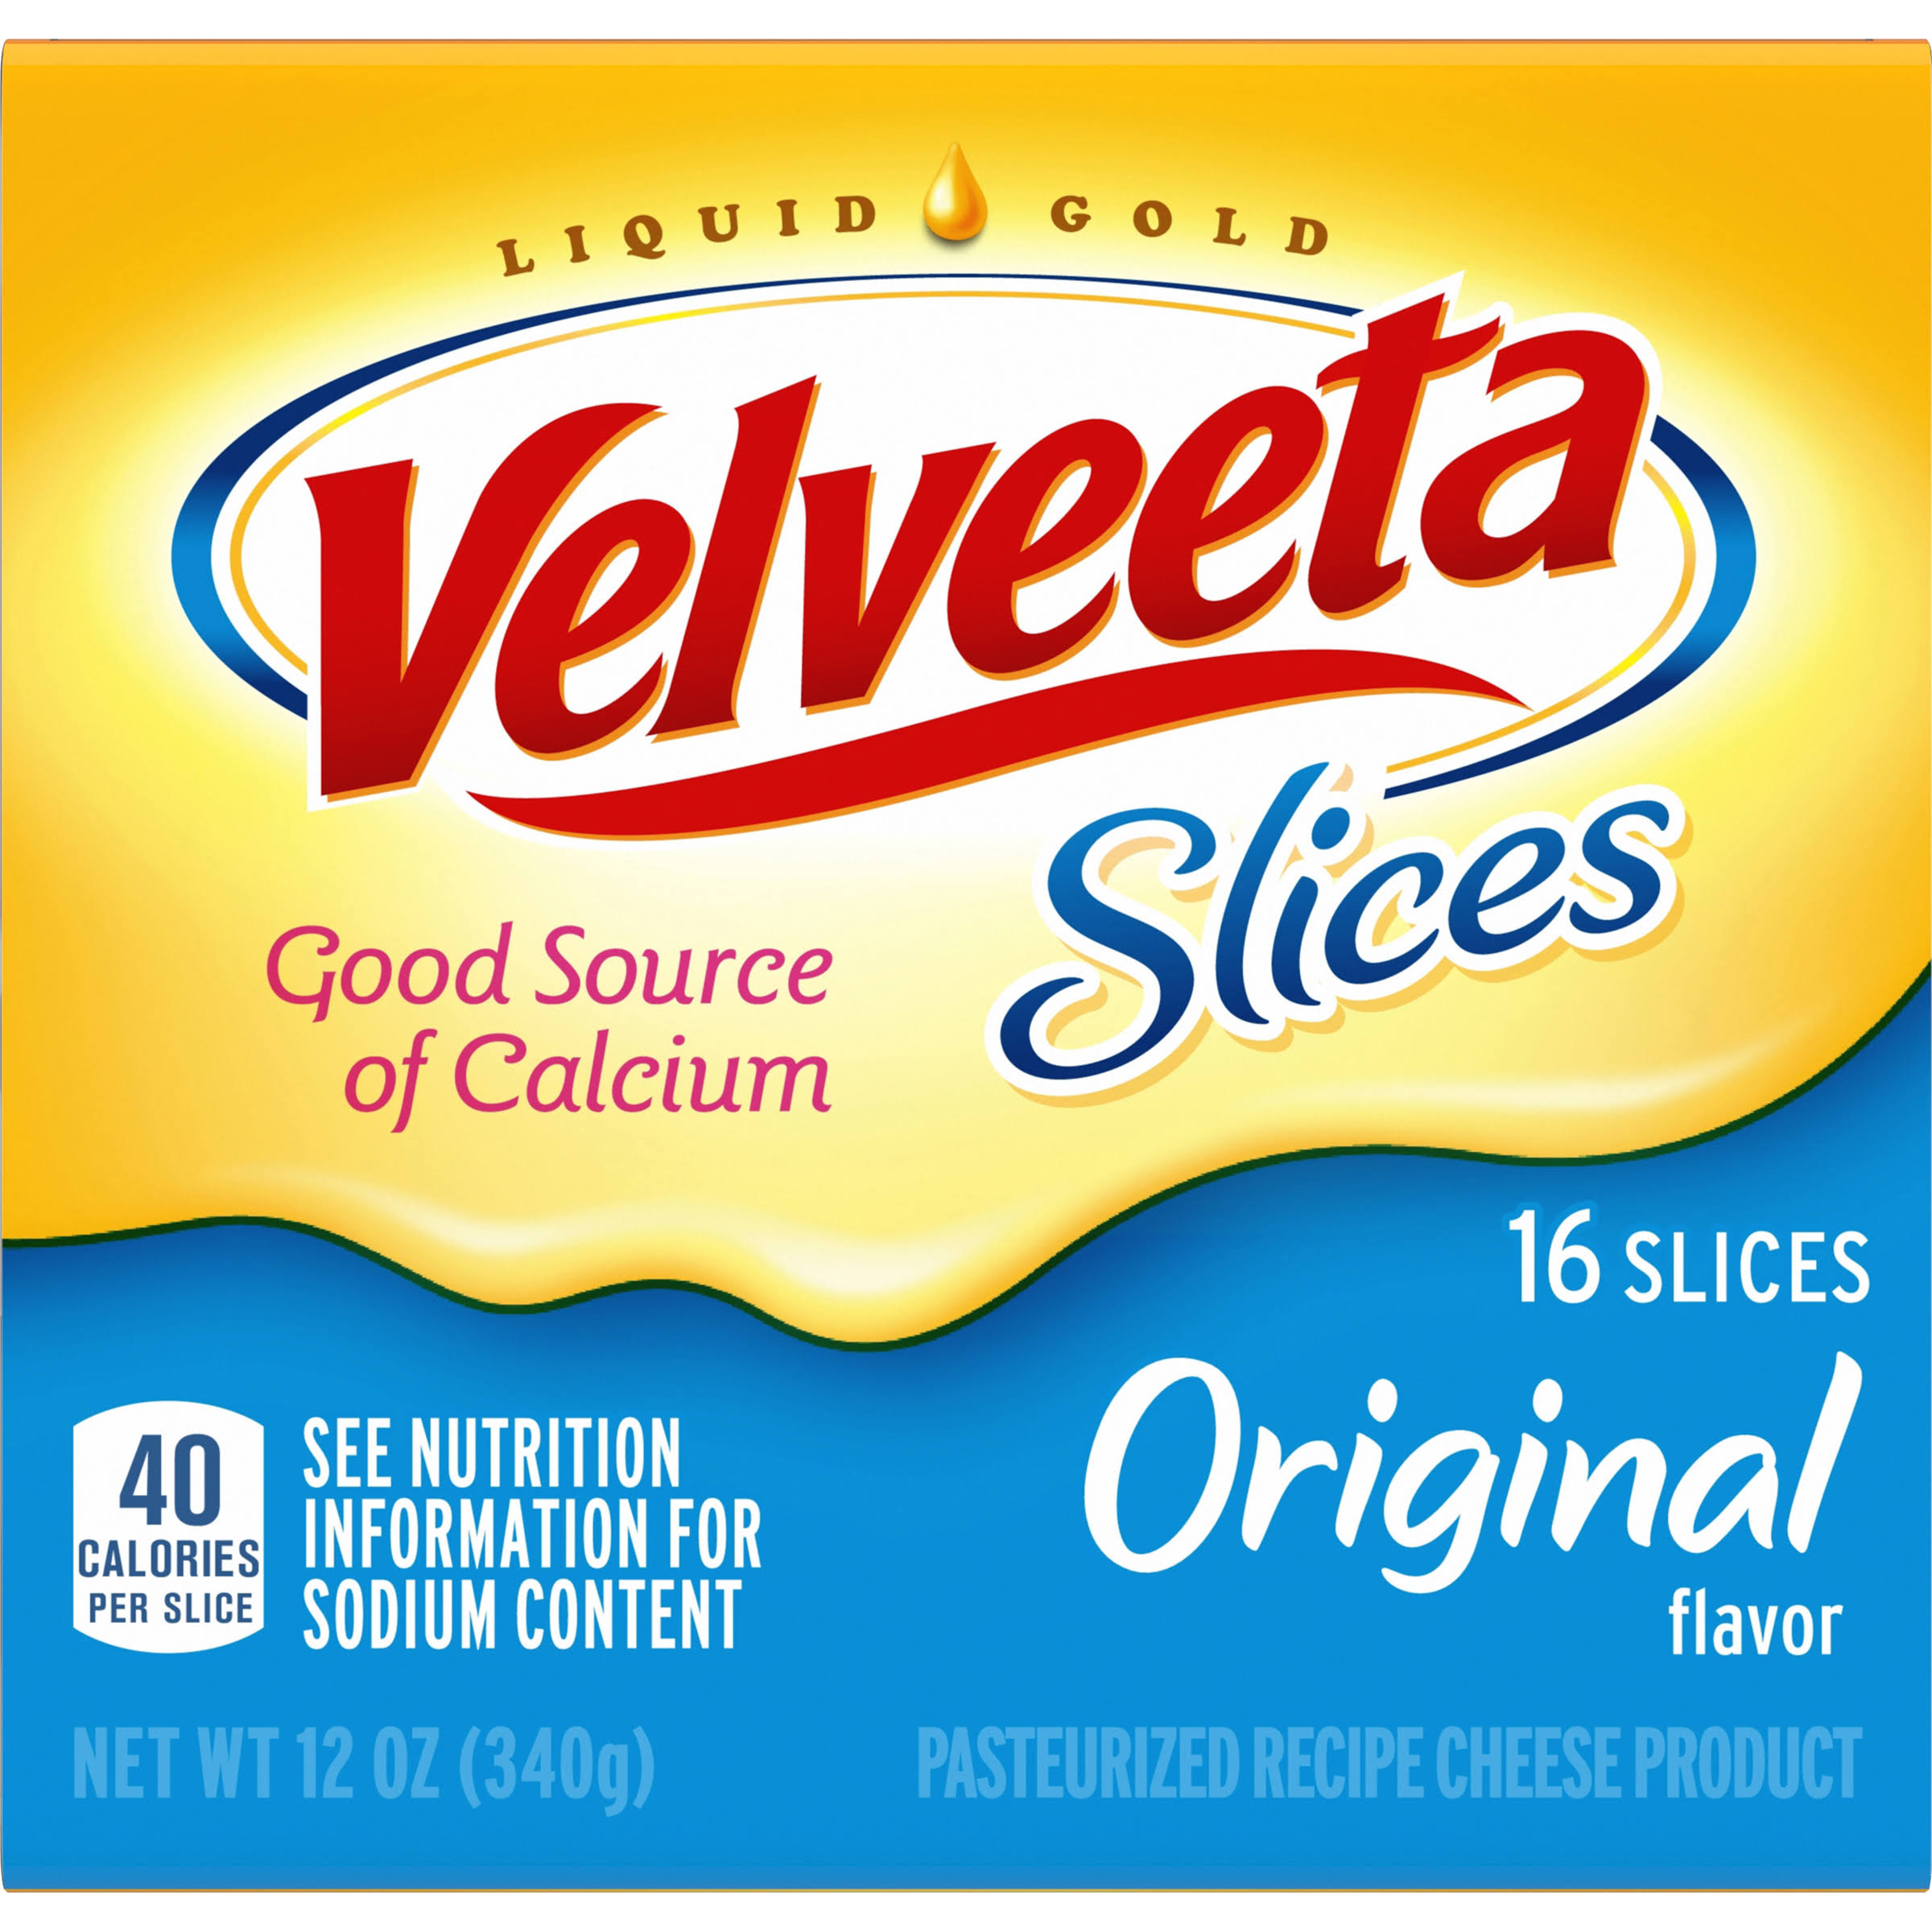 Velveeta Original Flavor Slices Cheese - 16ct, 12oz